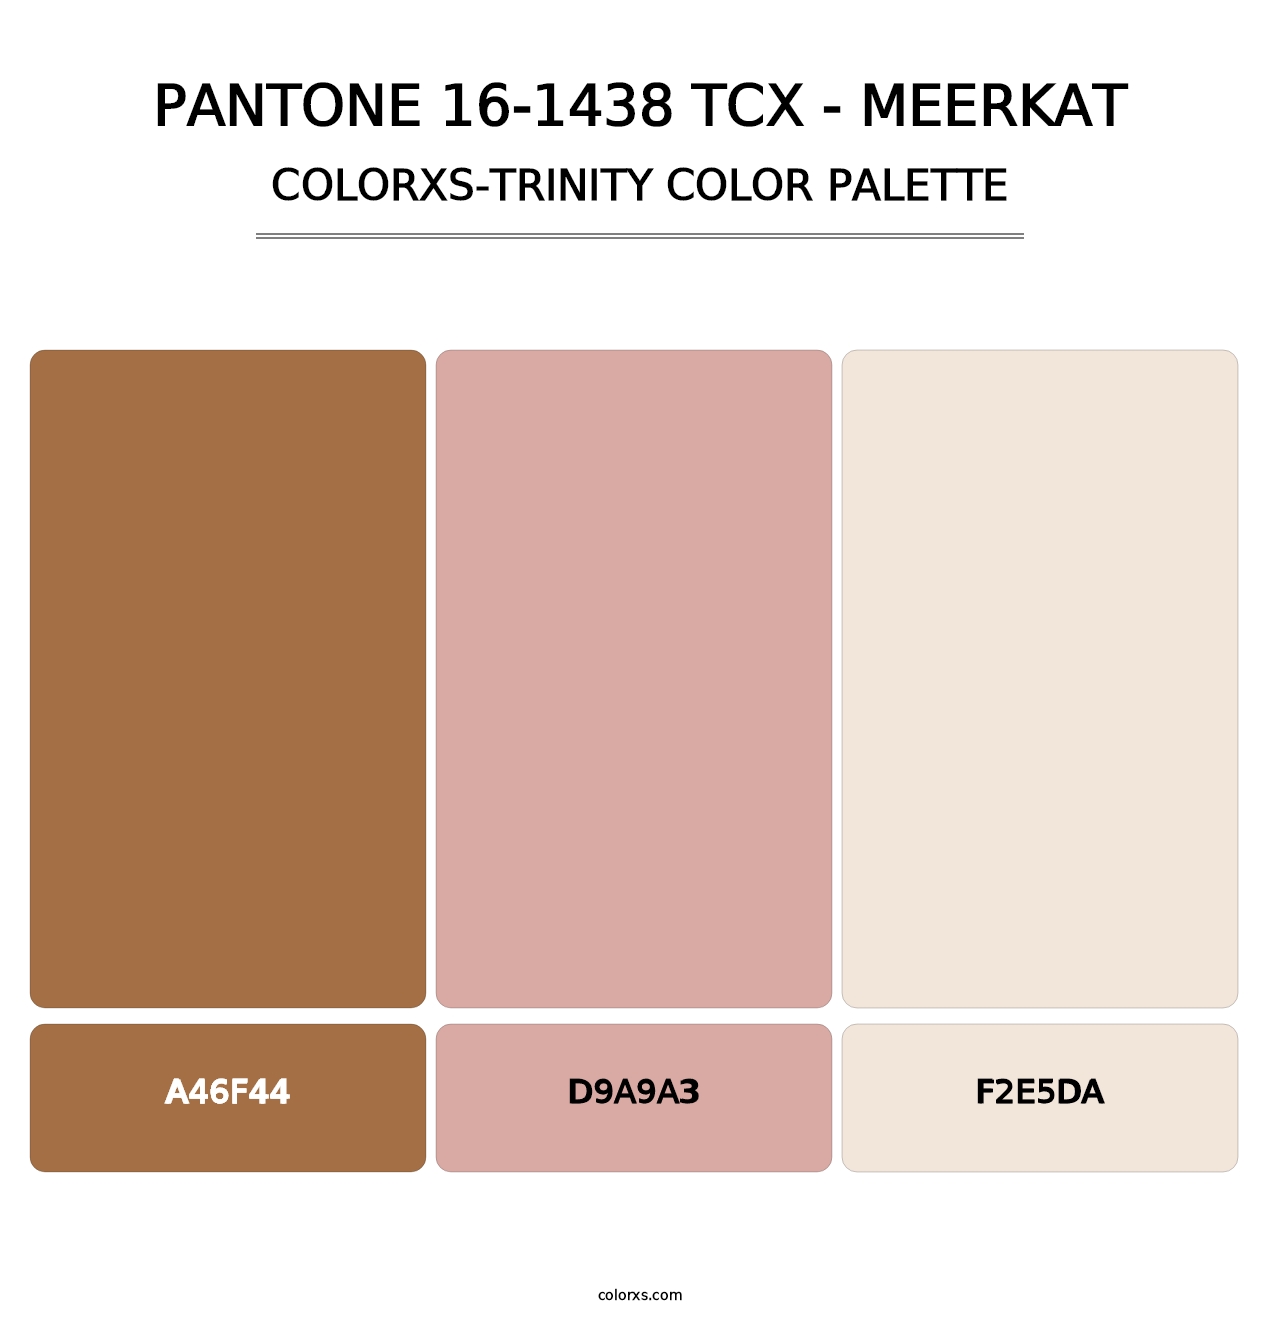 PANTONE 16-1438 TCX - Meerkat - Colorxs Trinity Palette